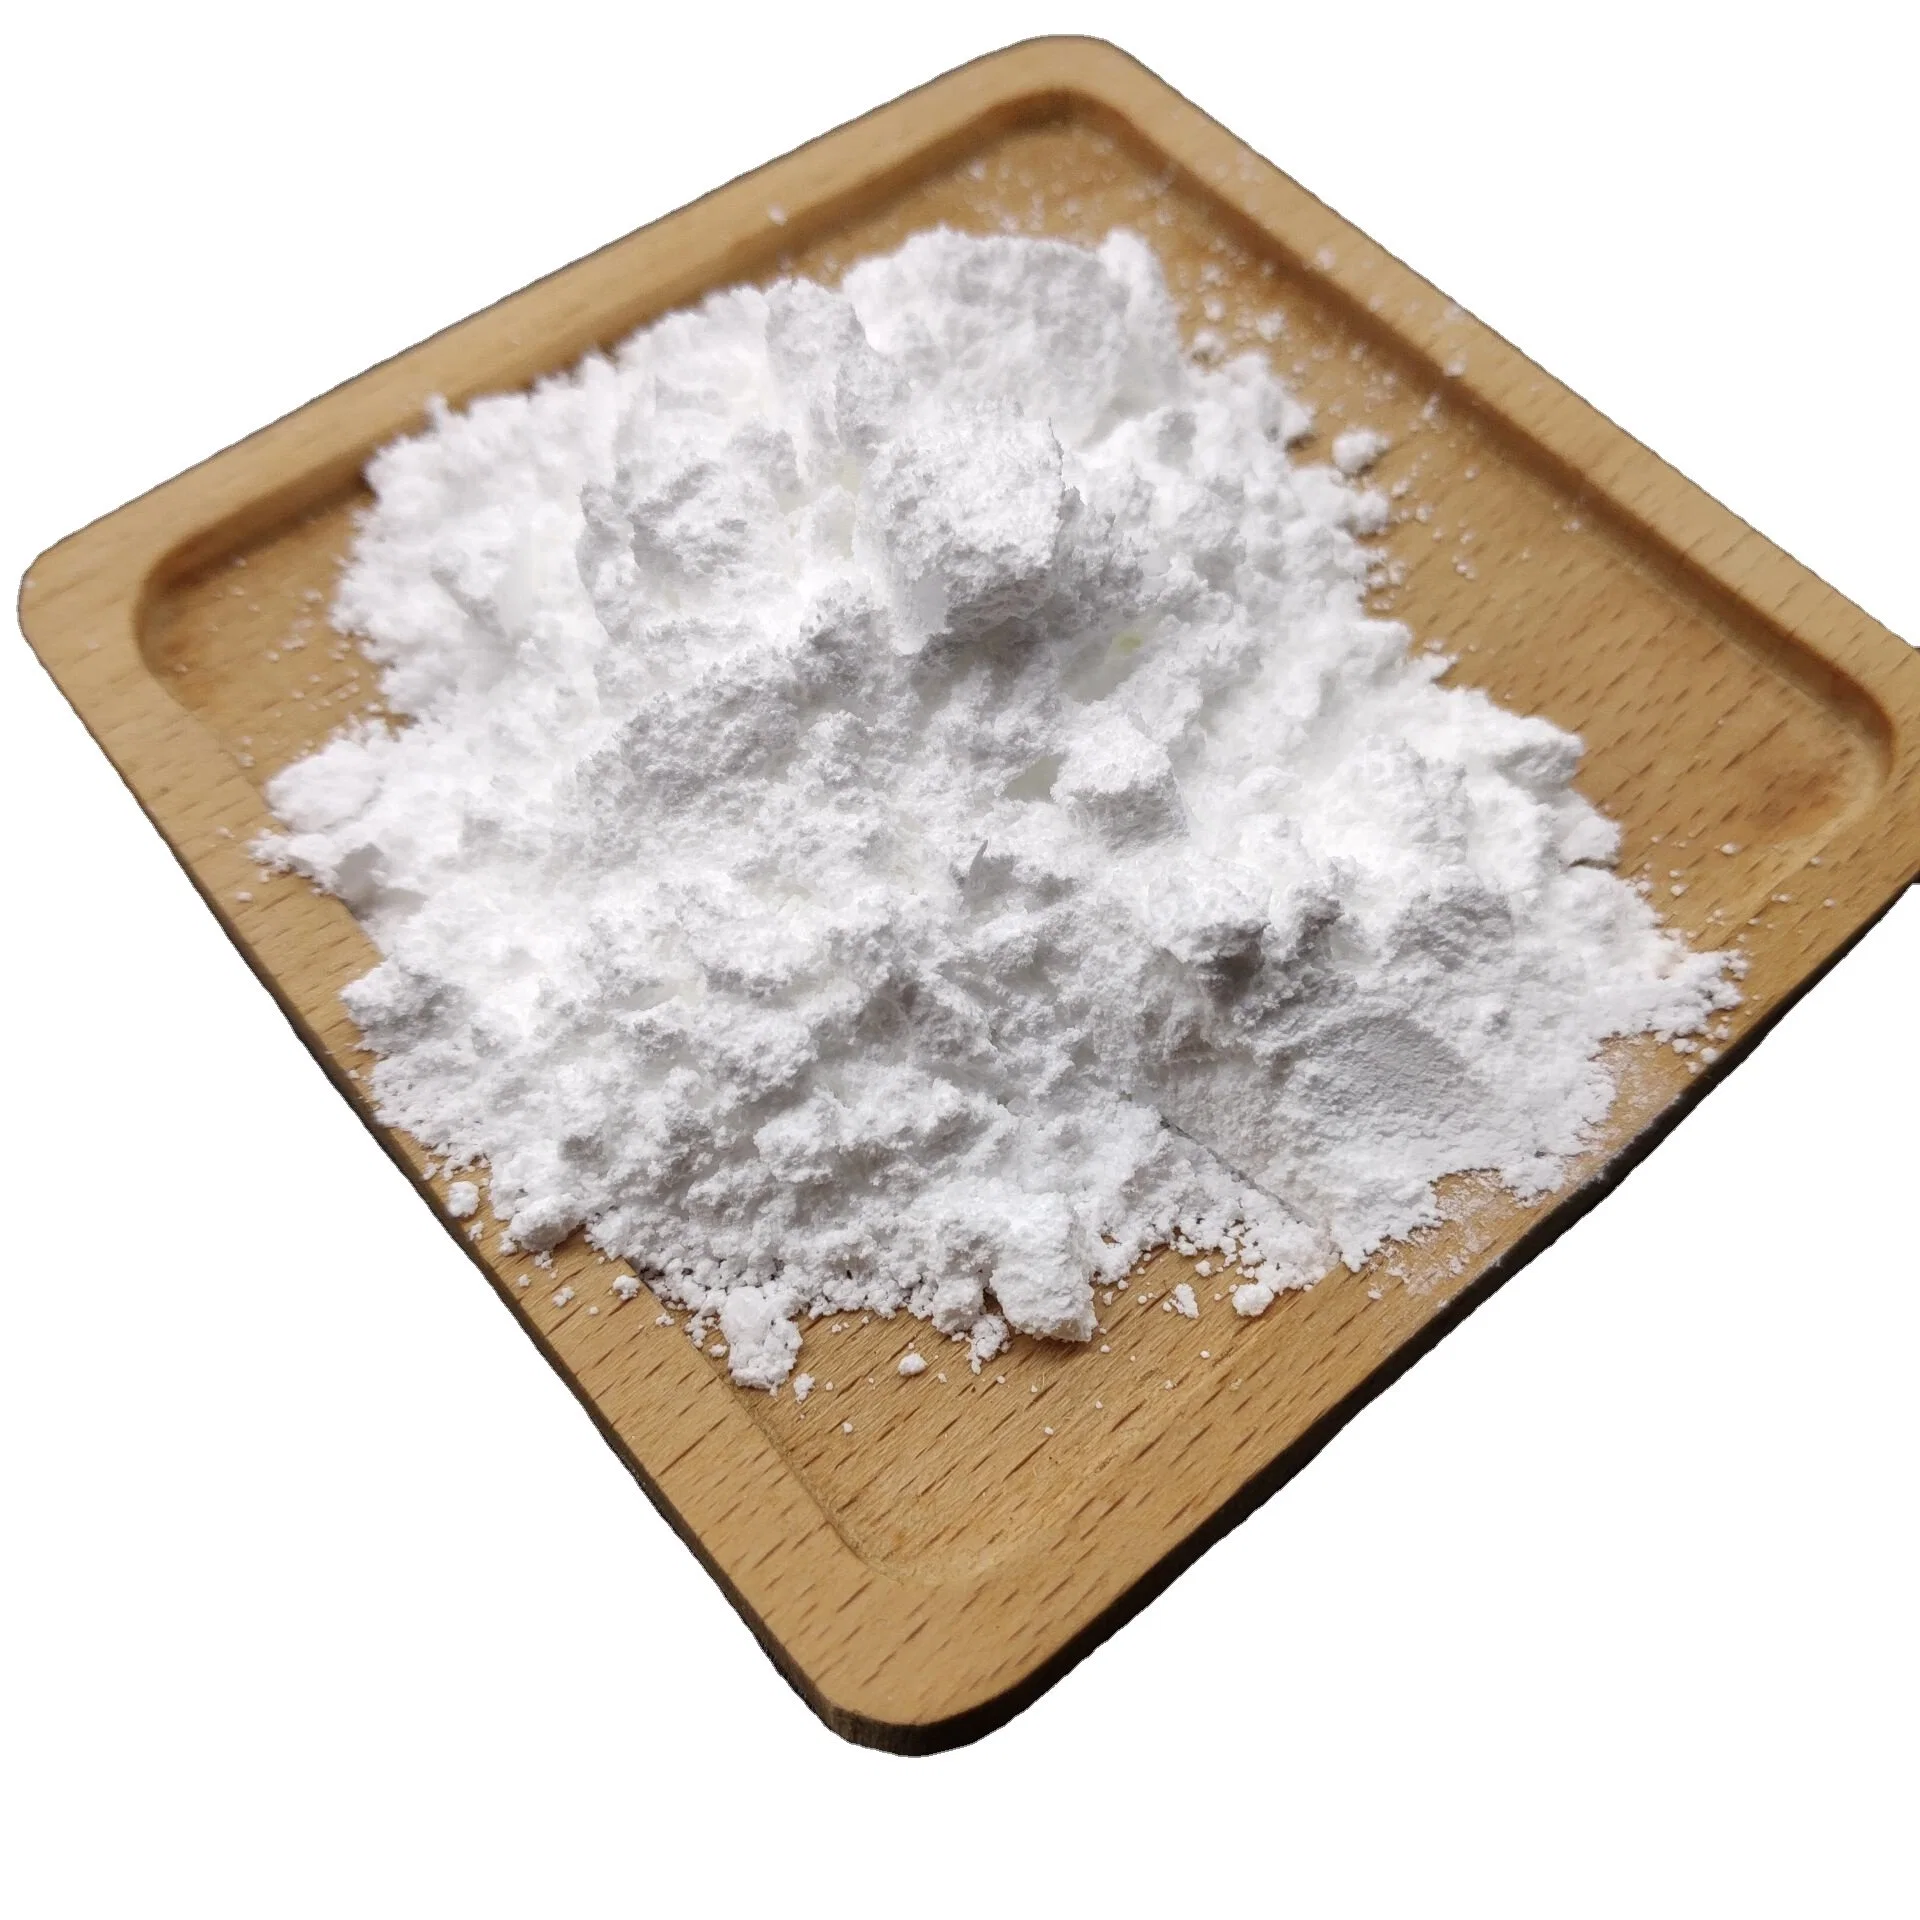 China Manufacturer Sell Dl-Methionine Powder CAS 59-51-8 Methionine